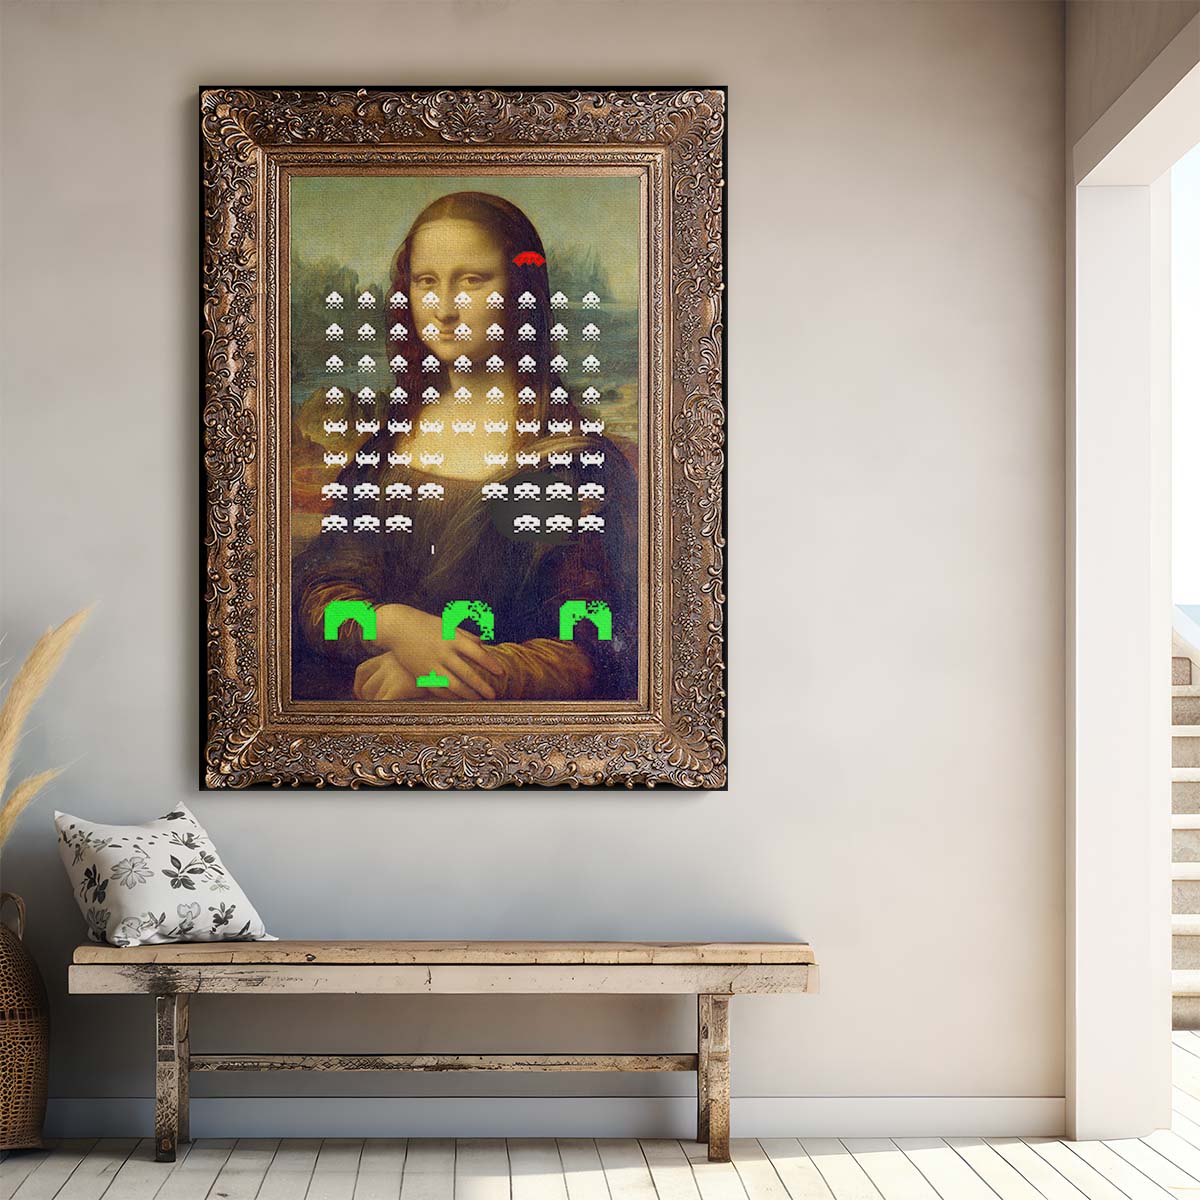 Mona Lisa Da Vinci Invaders Wall Art by Luxuriance Designs. Made in USA.